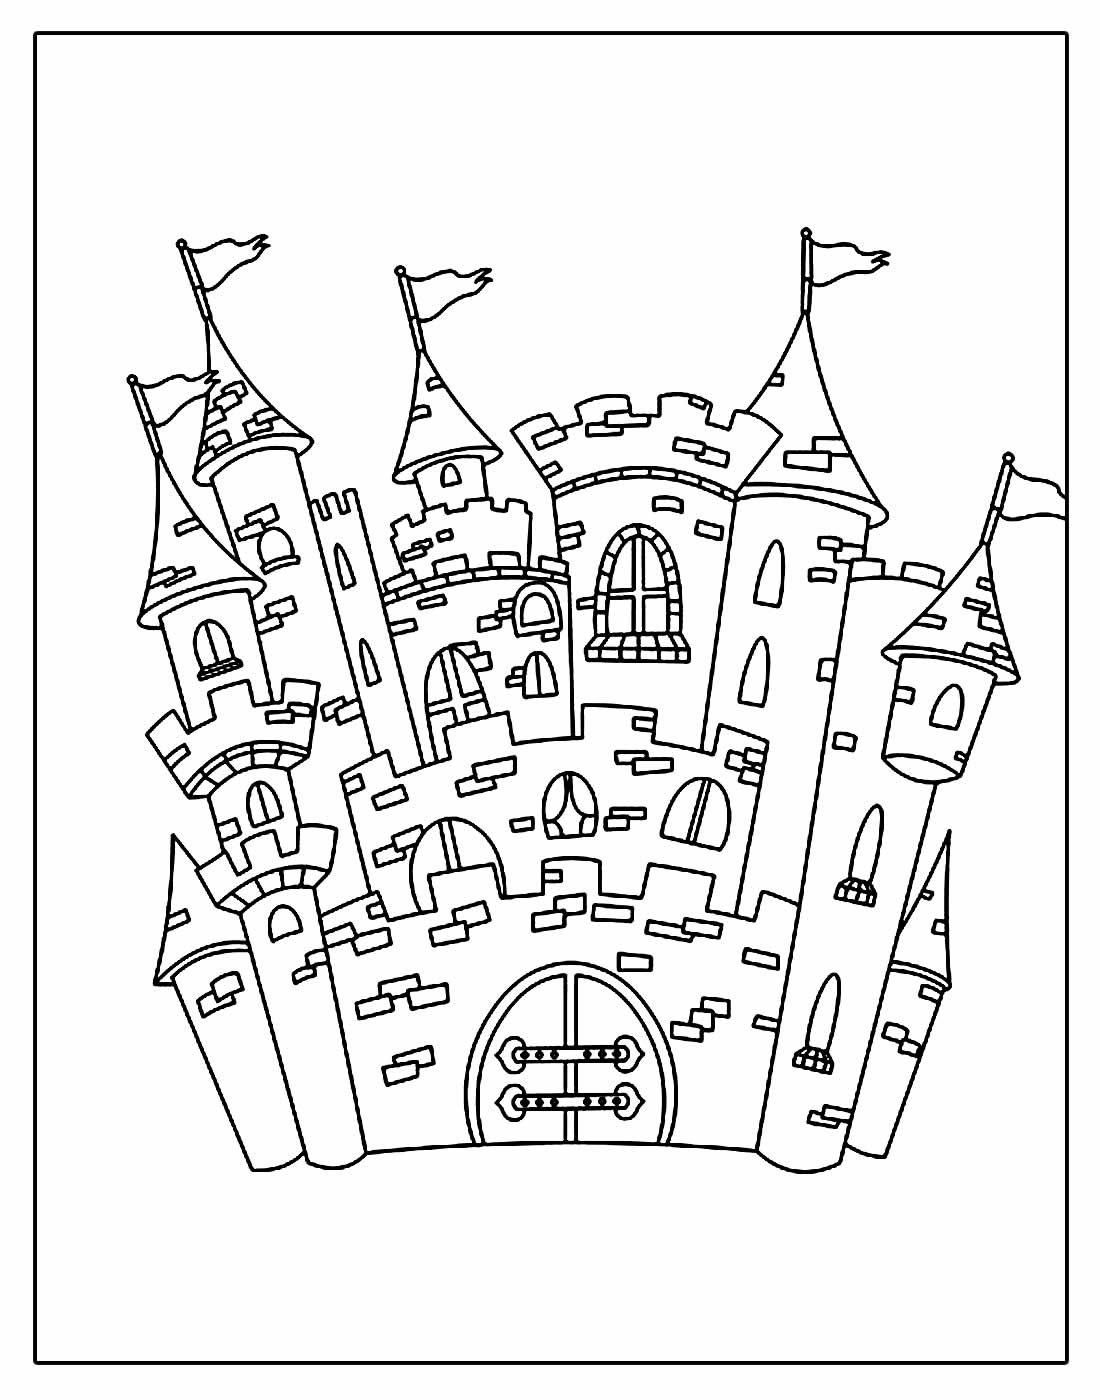 Castelo para colorir